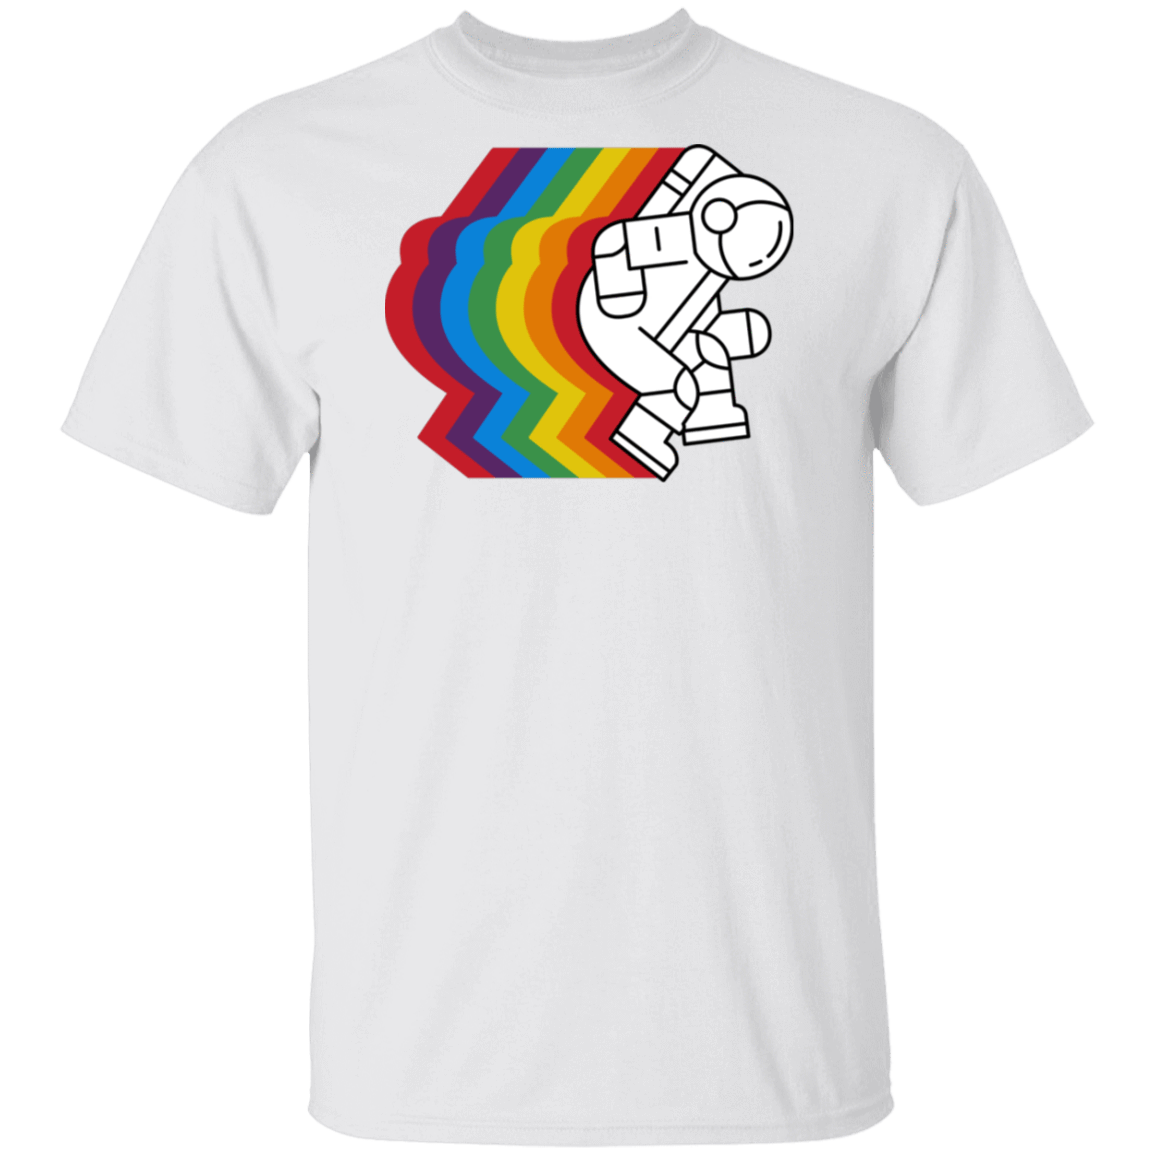 T-Shirts White / S Spaceman T-Shirt